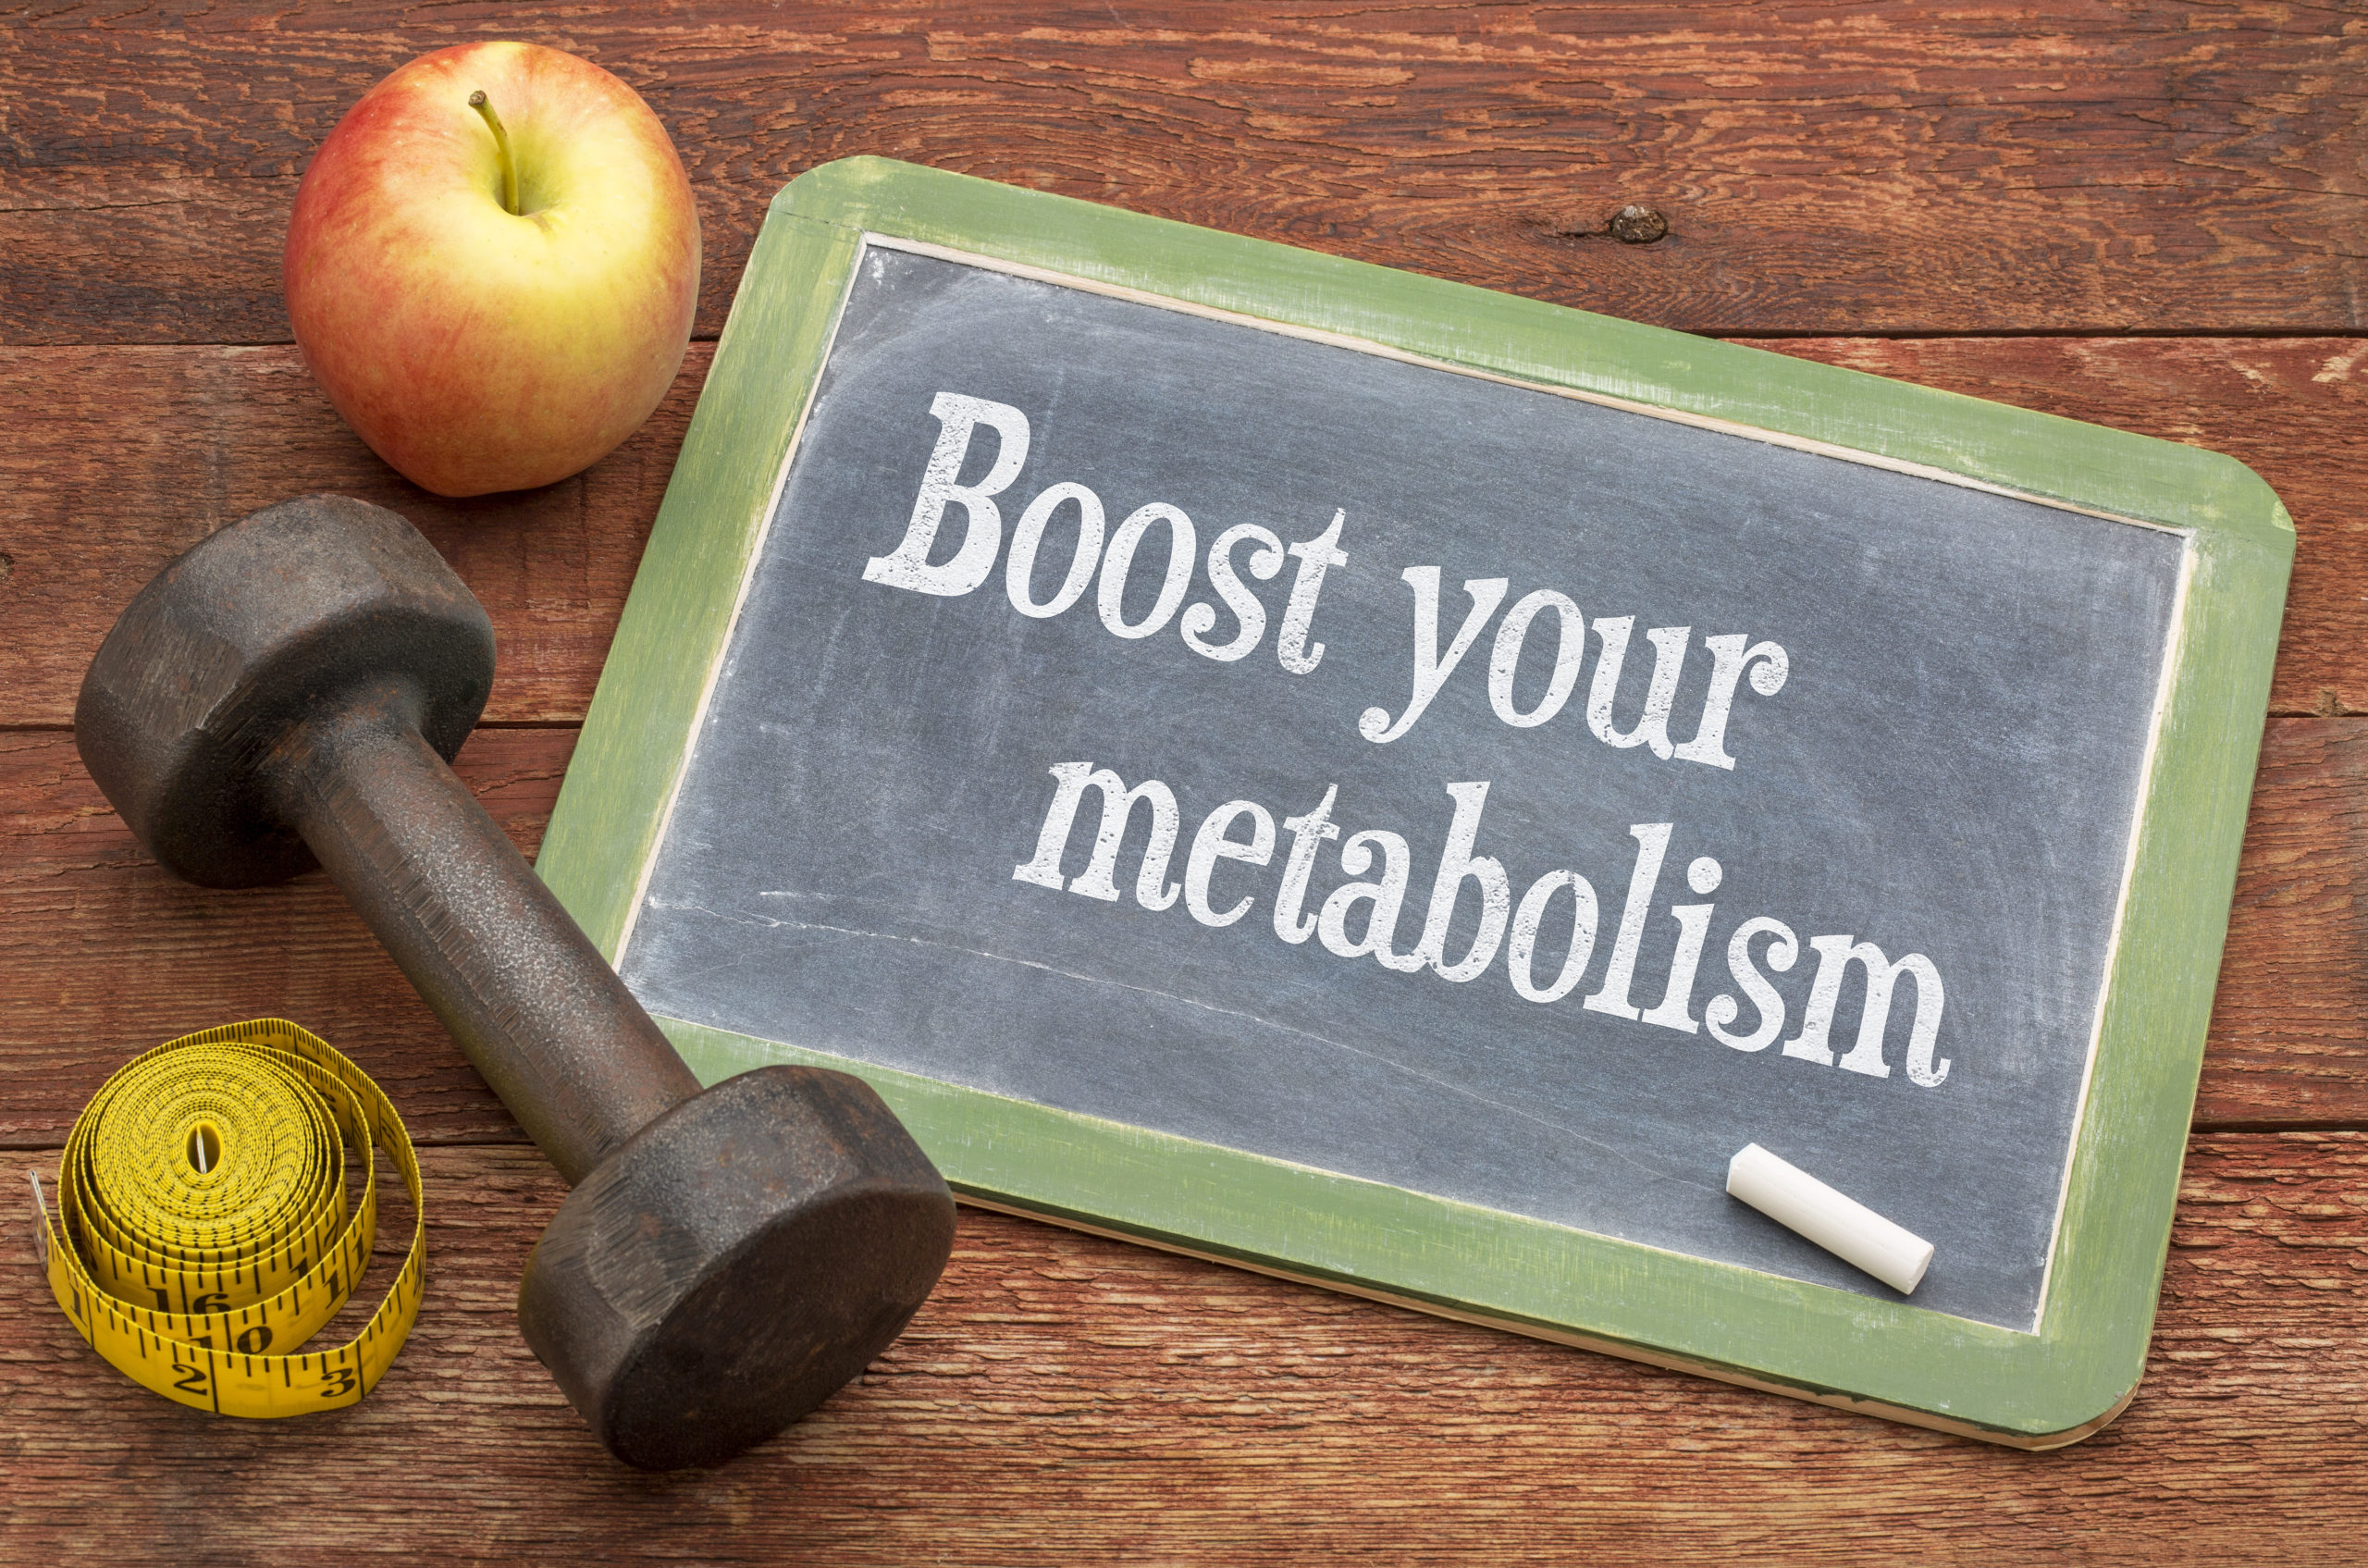 5 Metabolism Myths-Busted!